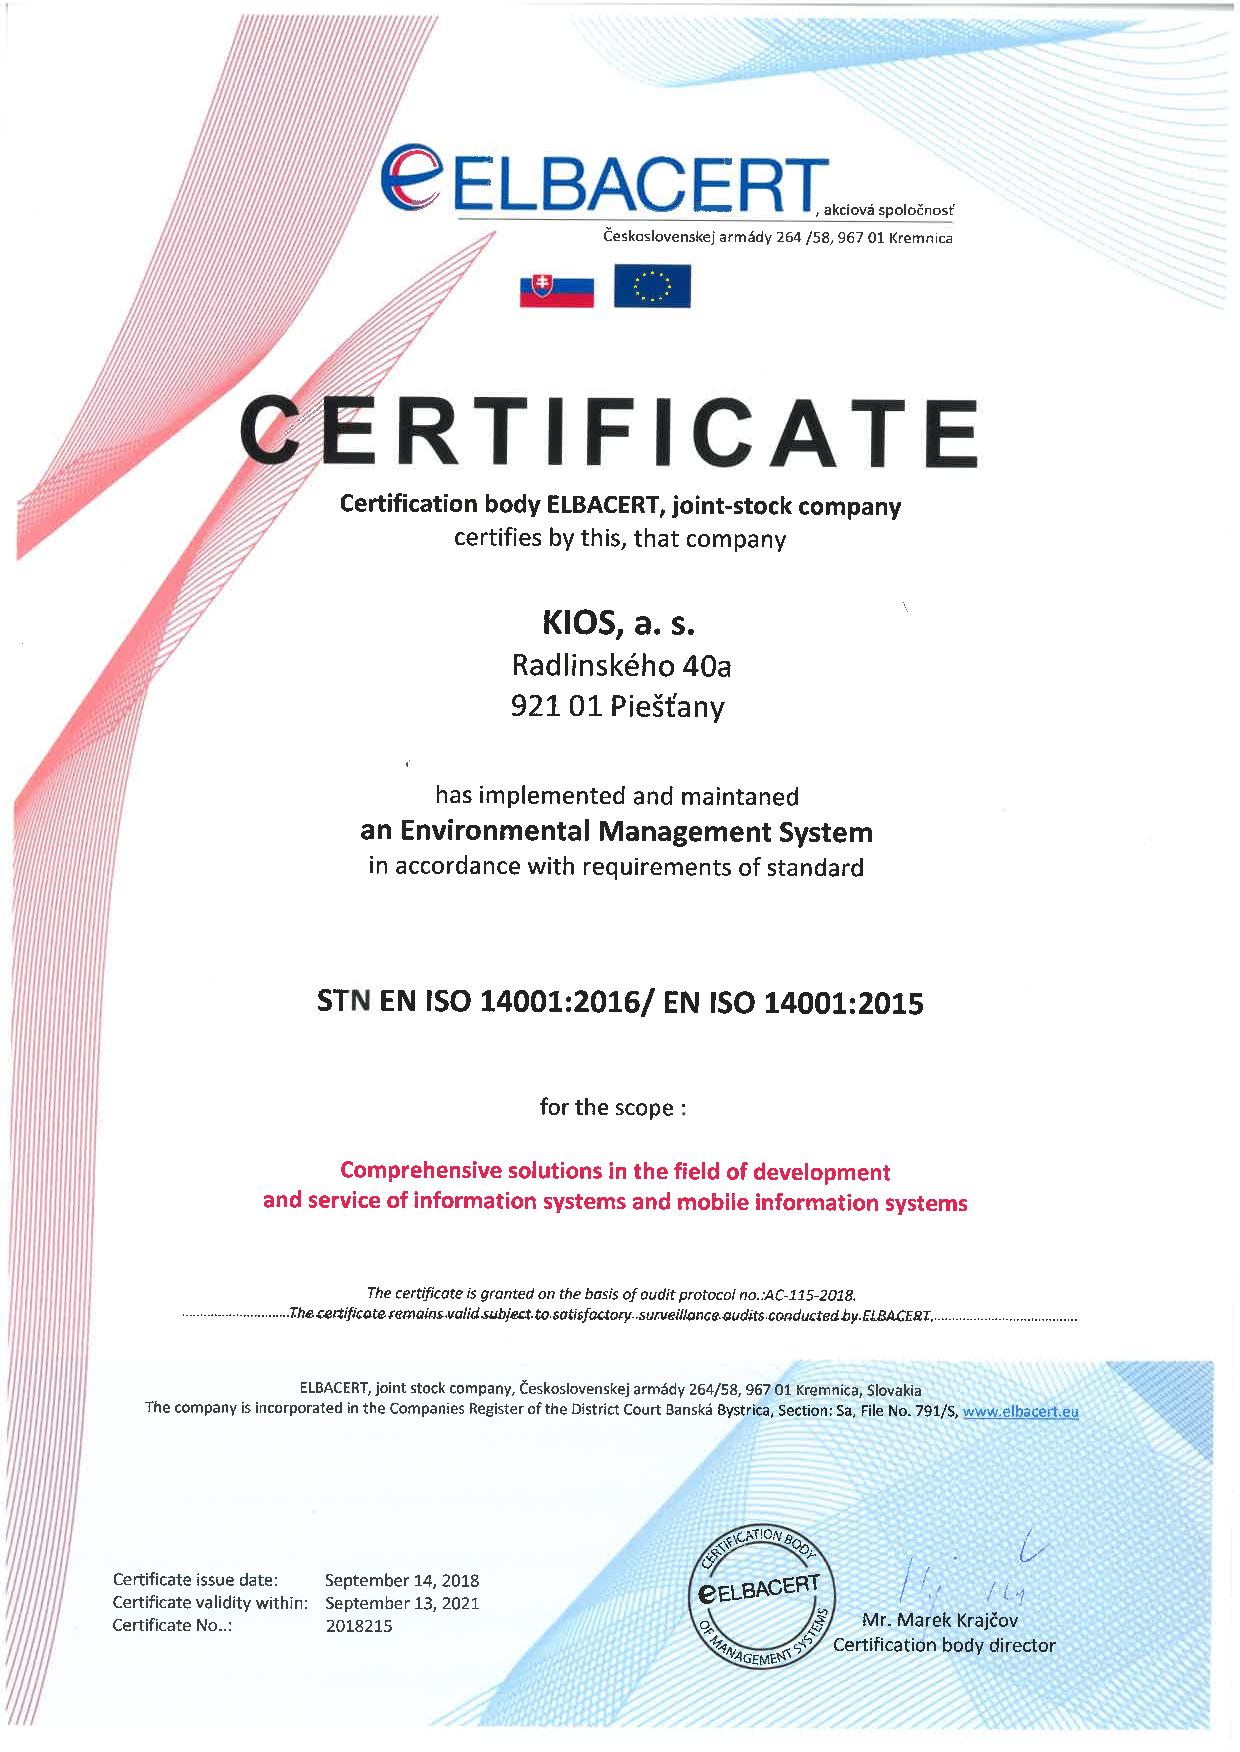 Certificates ISO 14001:2004